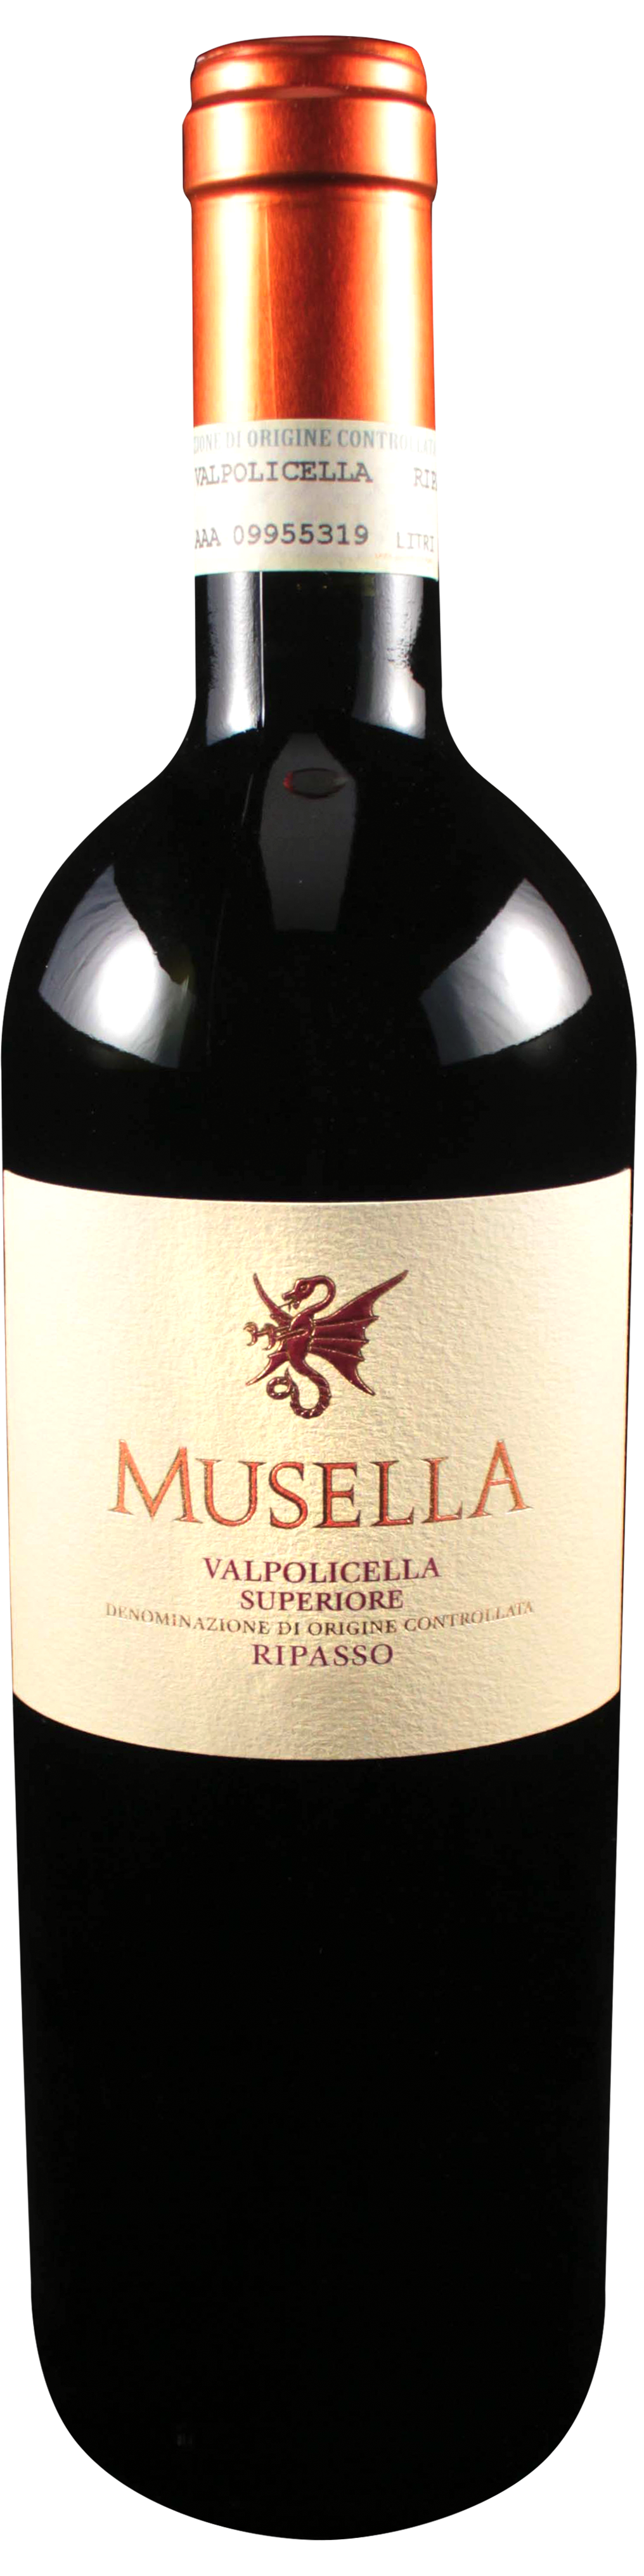 Bottle shot of 2010 Valpolicella Superiore Ripasso